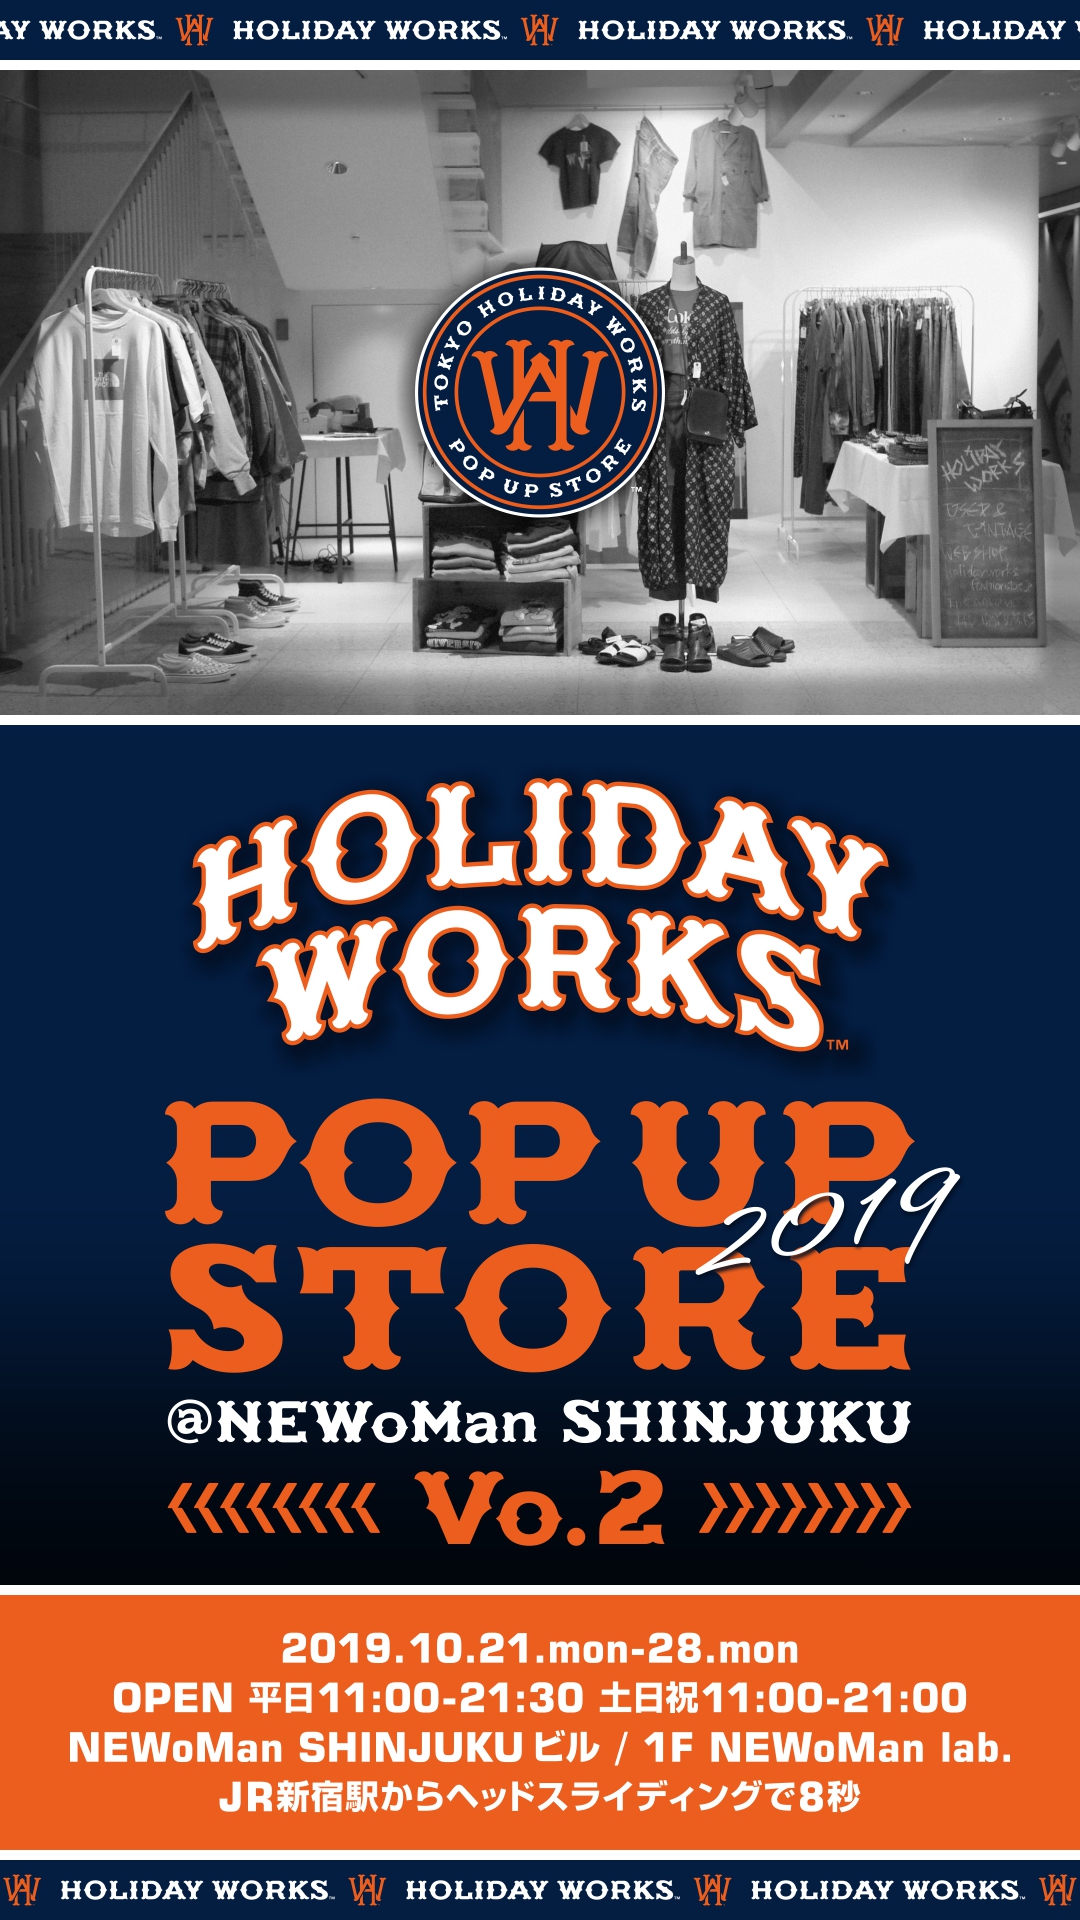 HOLIDAY WORKS POP UP STORE @ NEWoMan SHINJUKU Vo.2